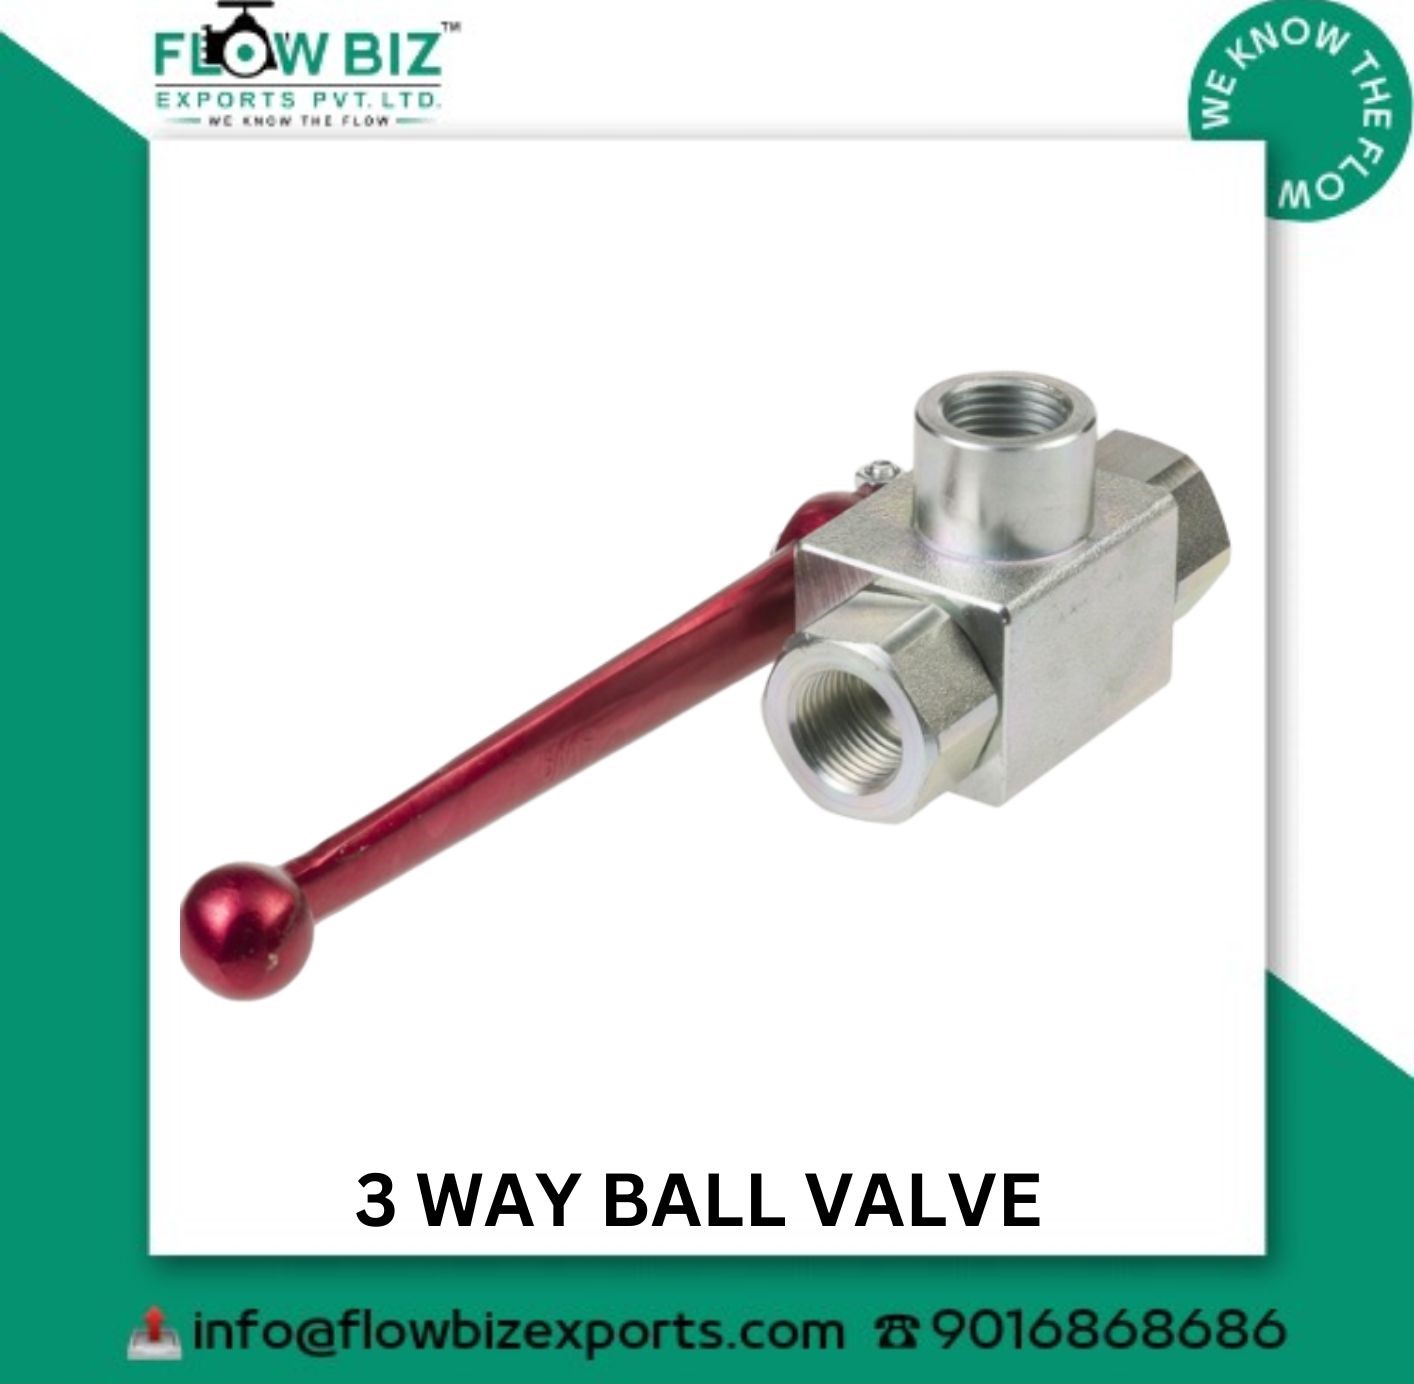 3 way ball valve manufacturer nashik - Flowbiz